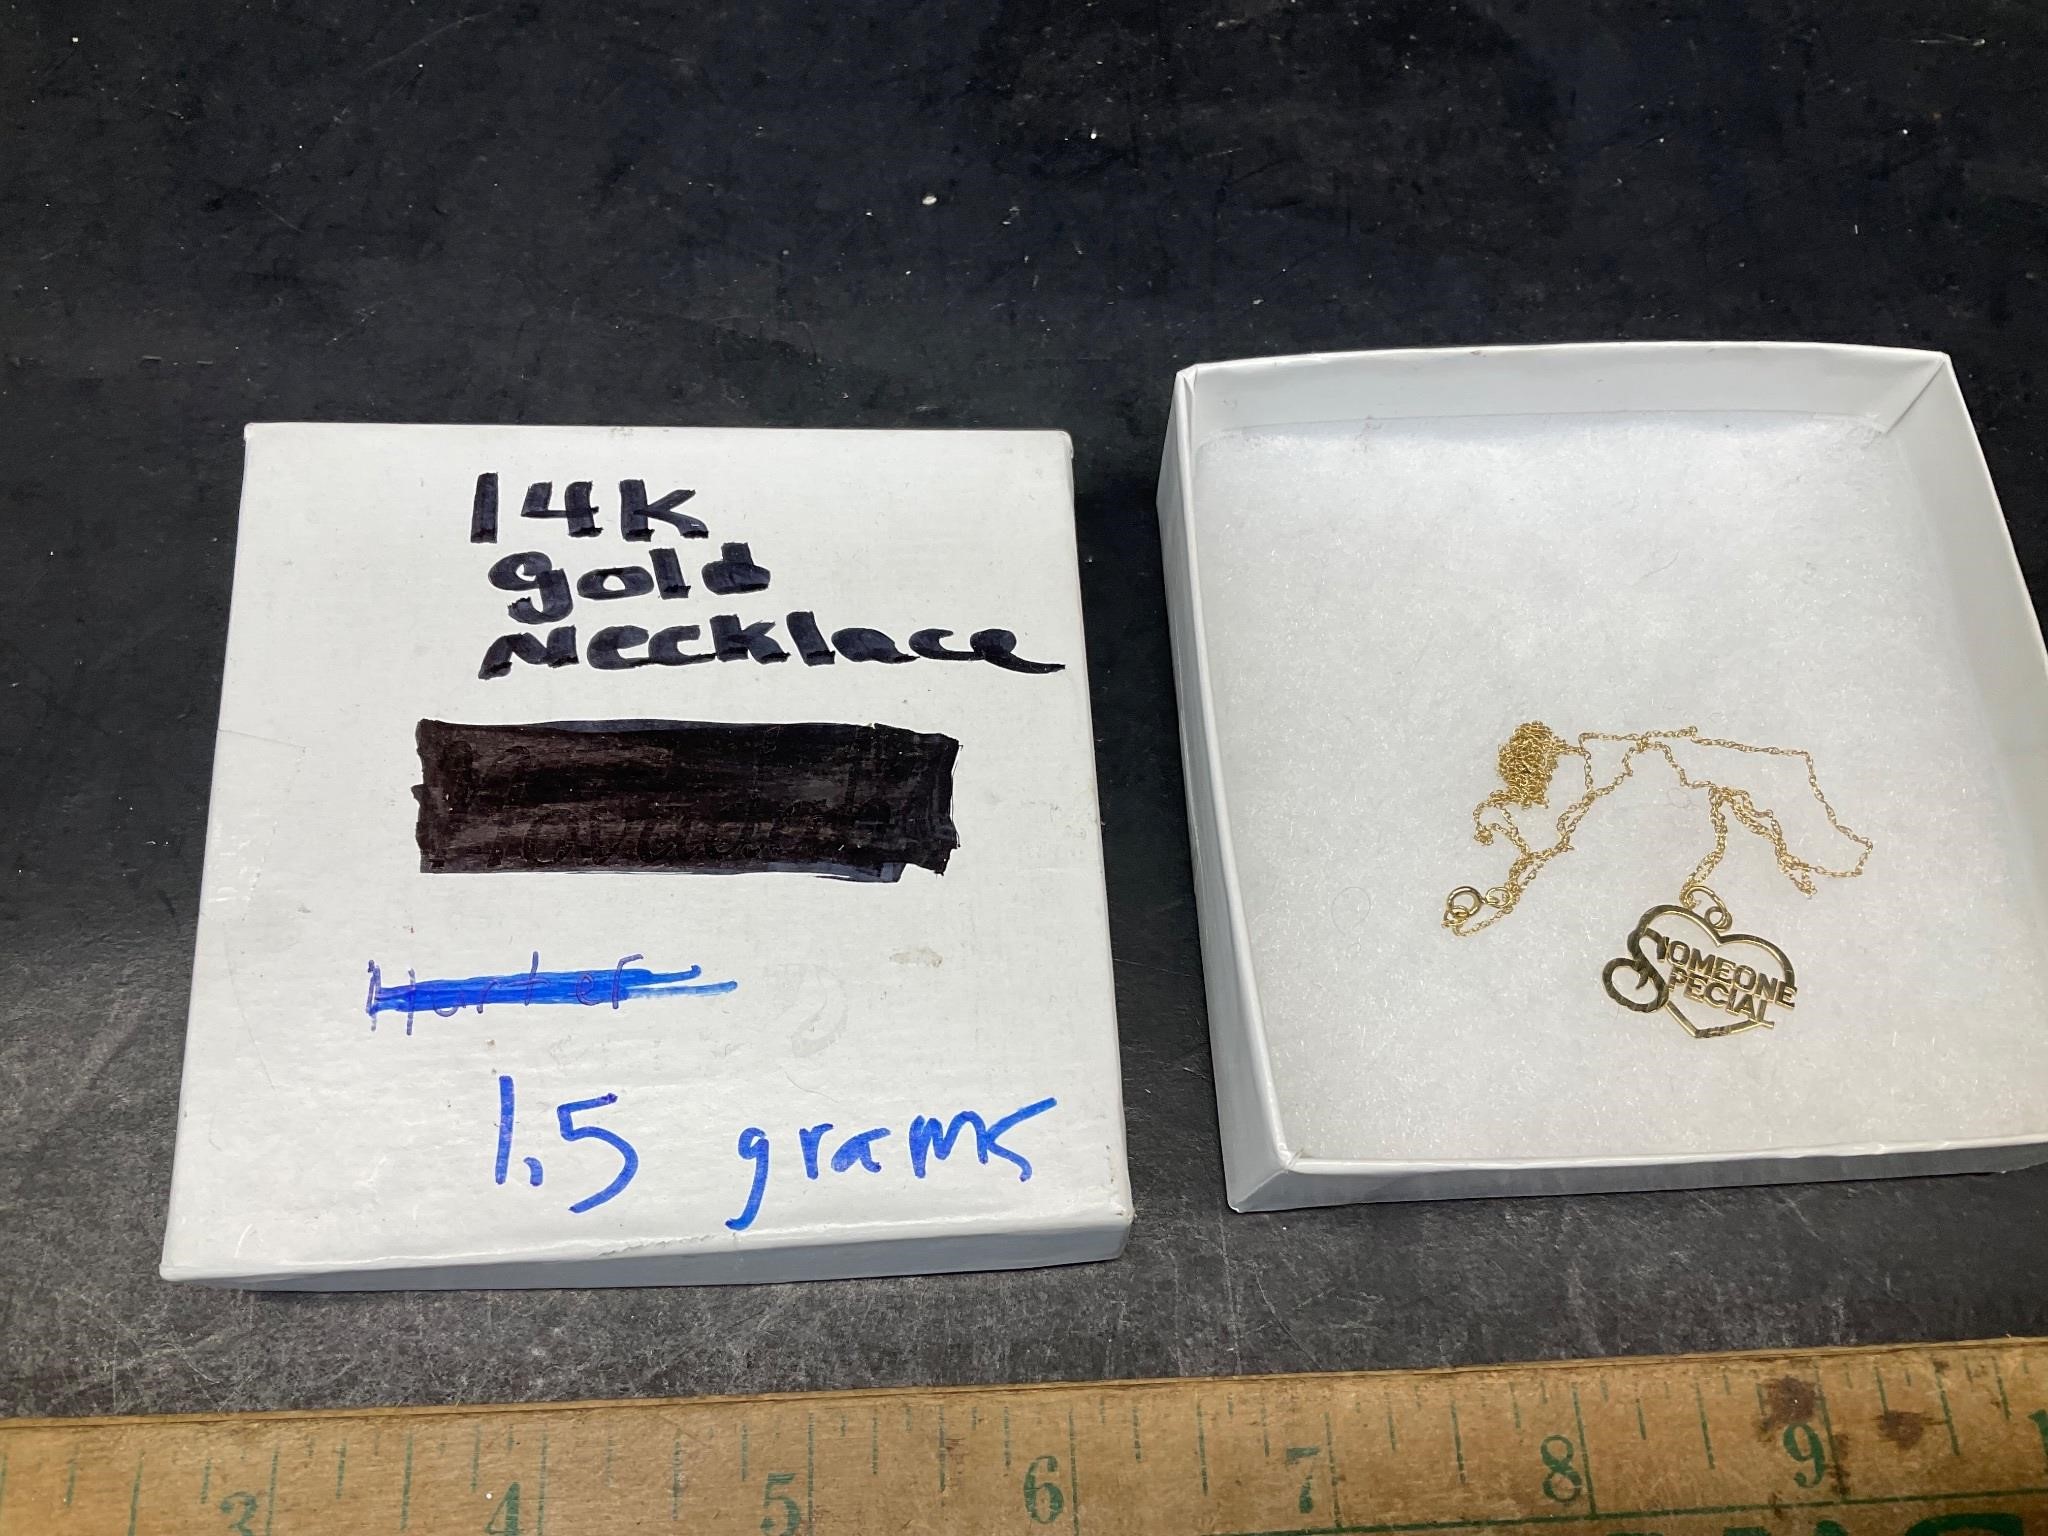 14 k necklace 1.5 grams